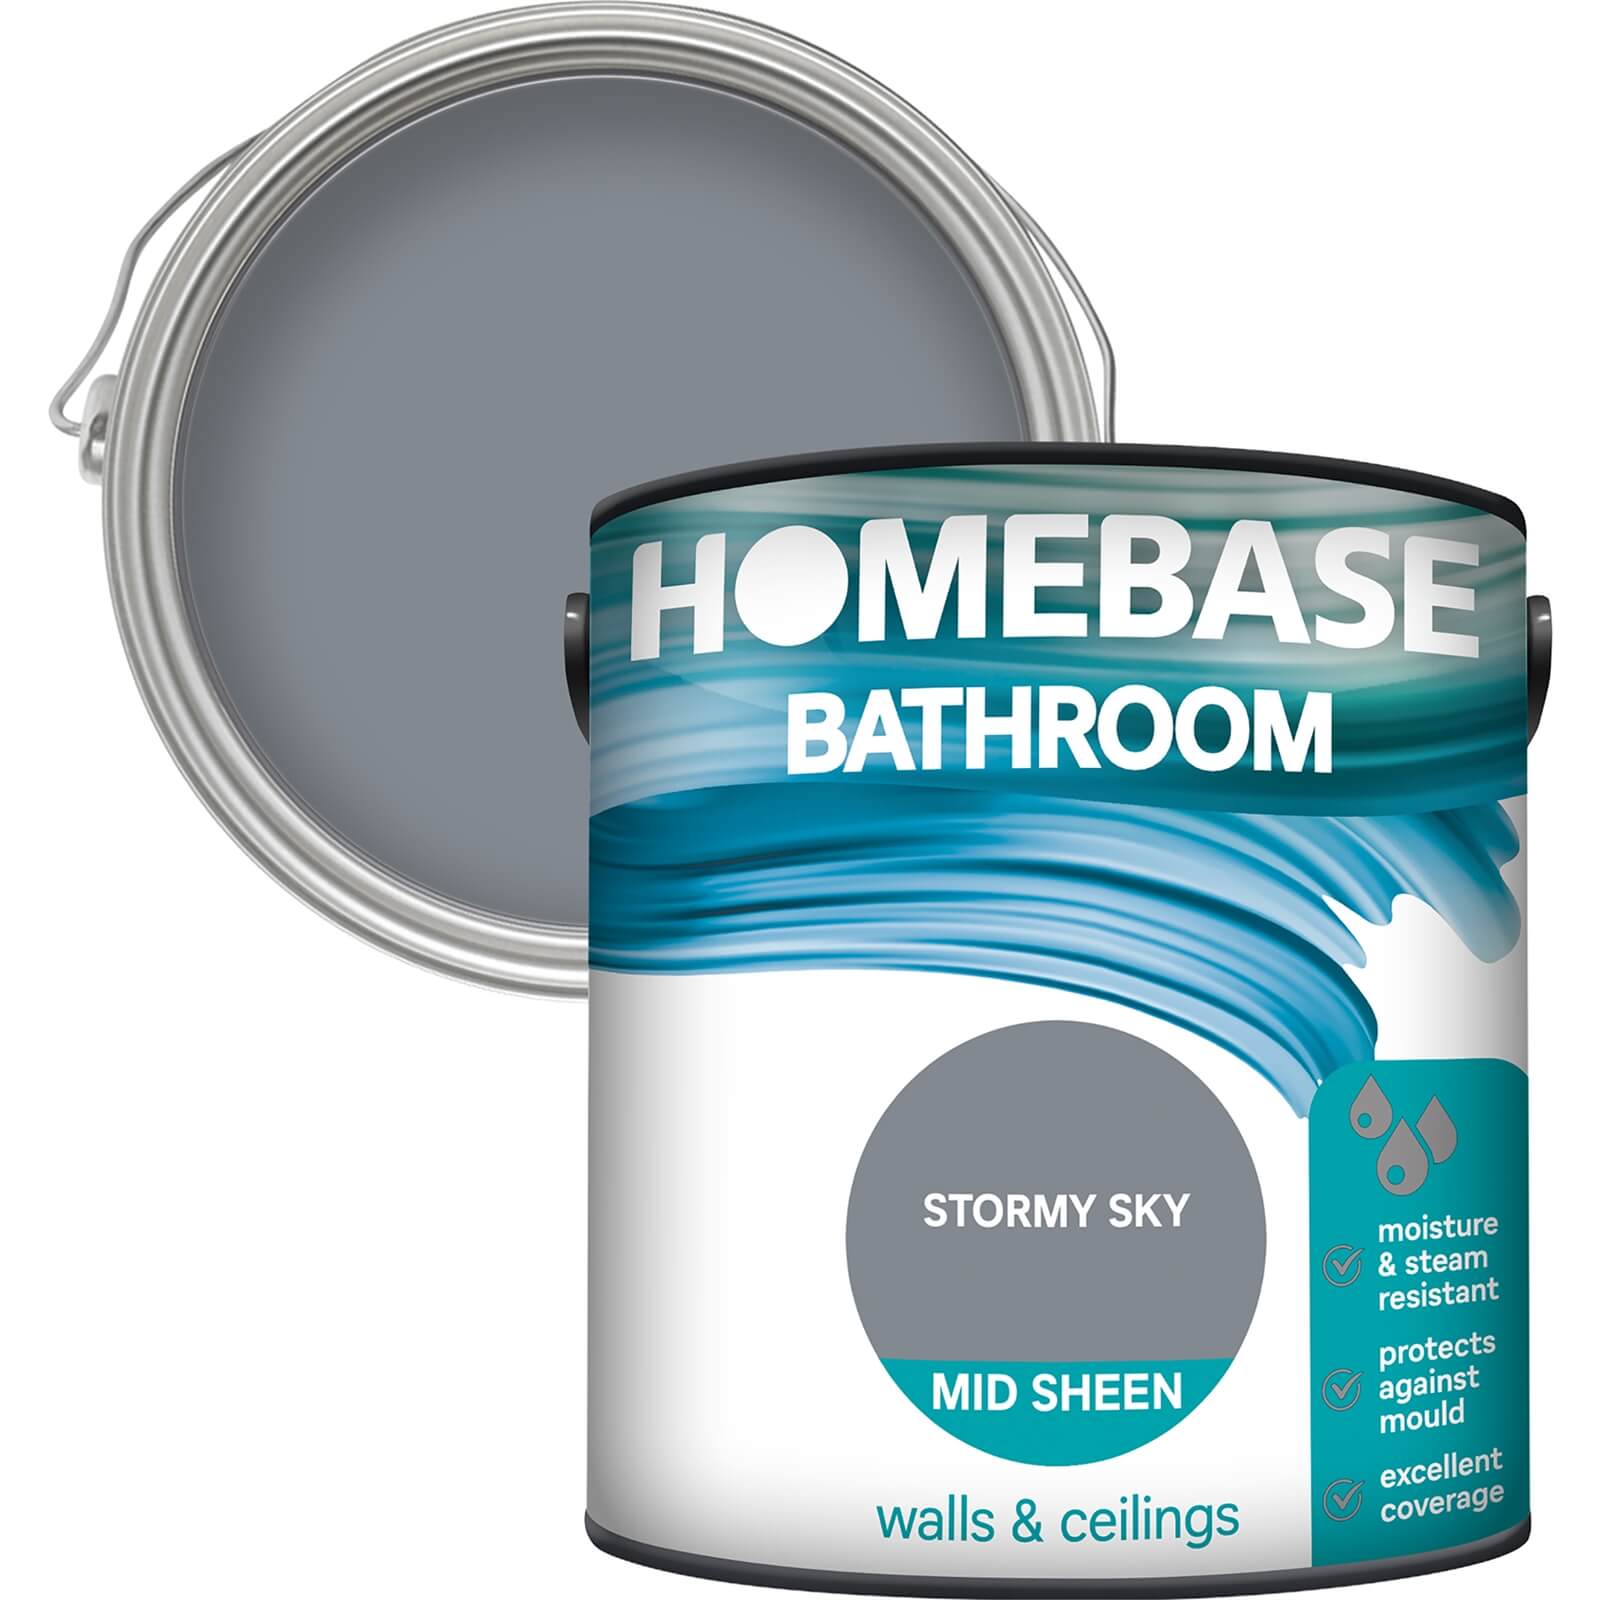 Homebase Bathroom Mid Sheen Paint - Stormy Sky 2.5L